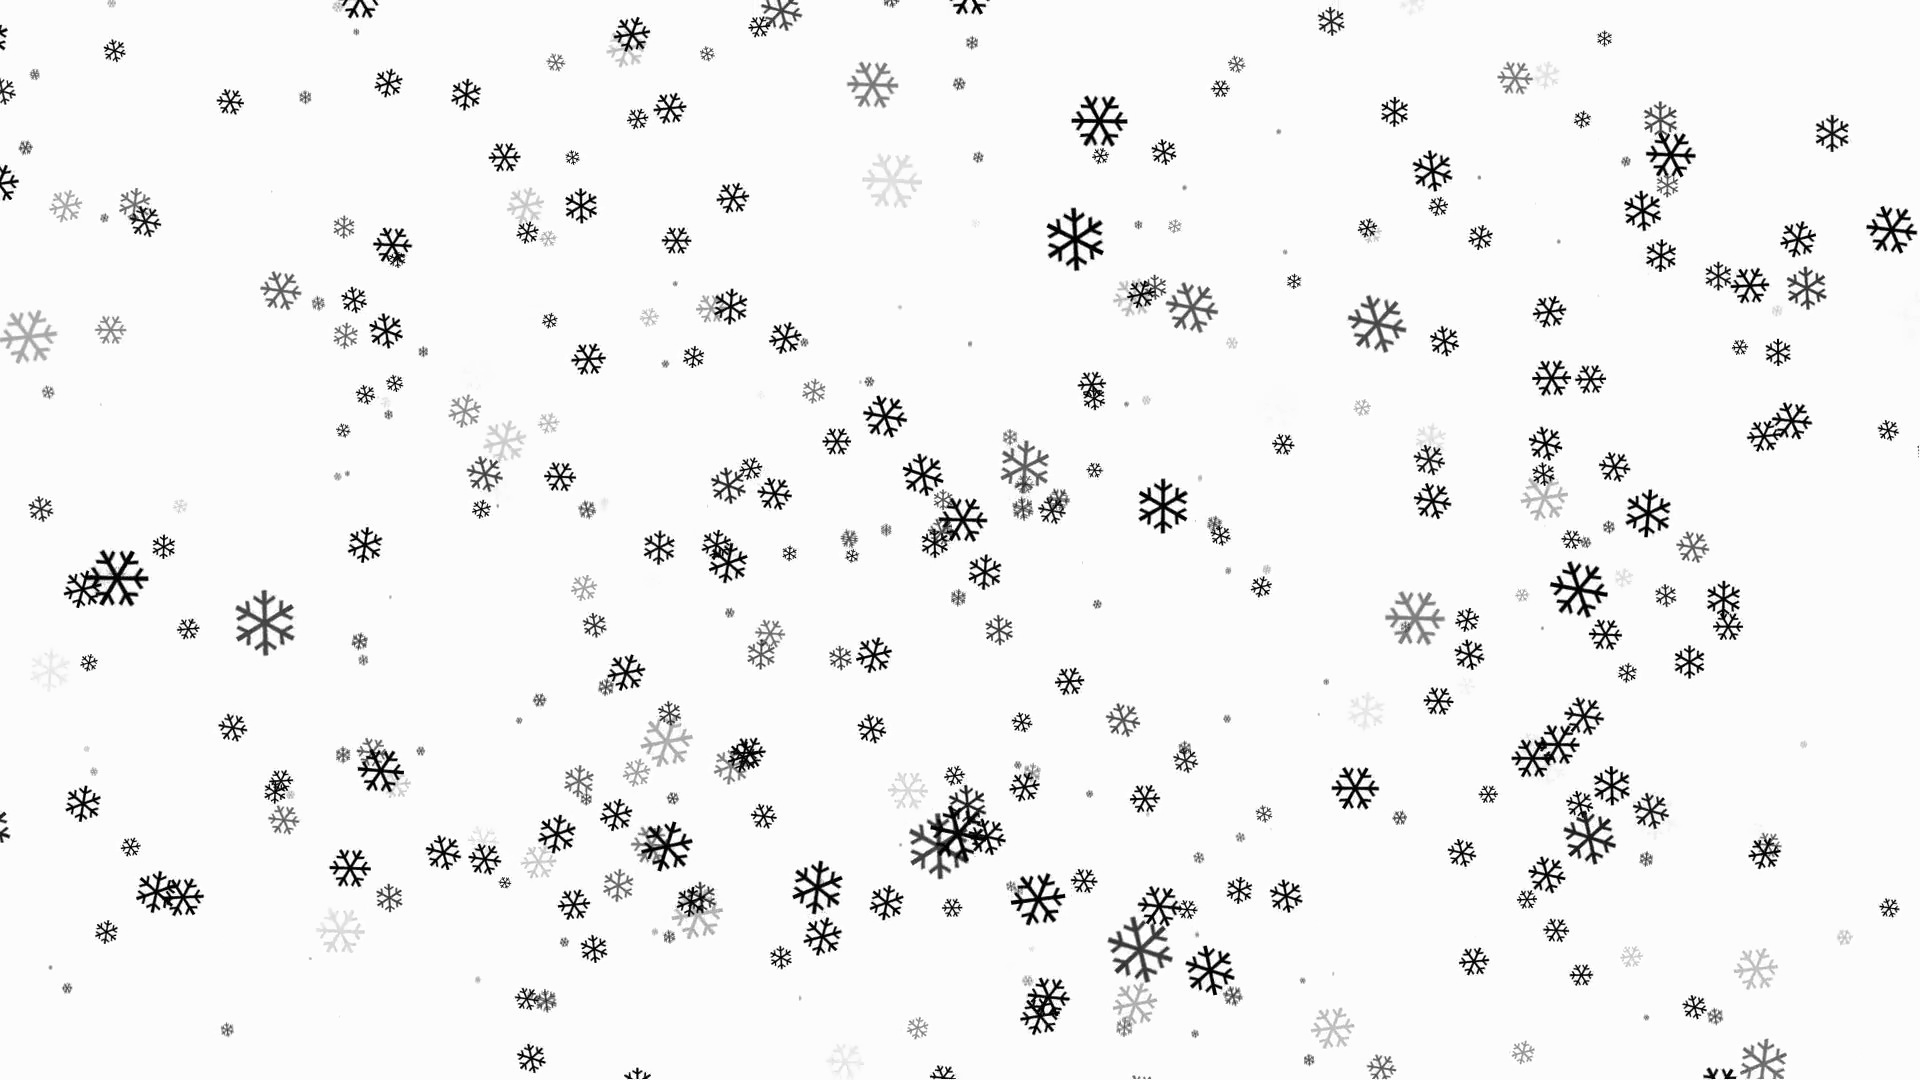 Snowflake PNG Image File